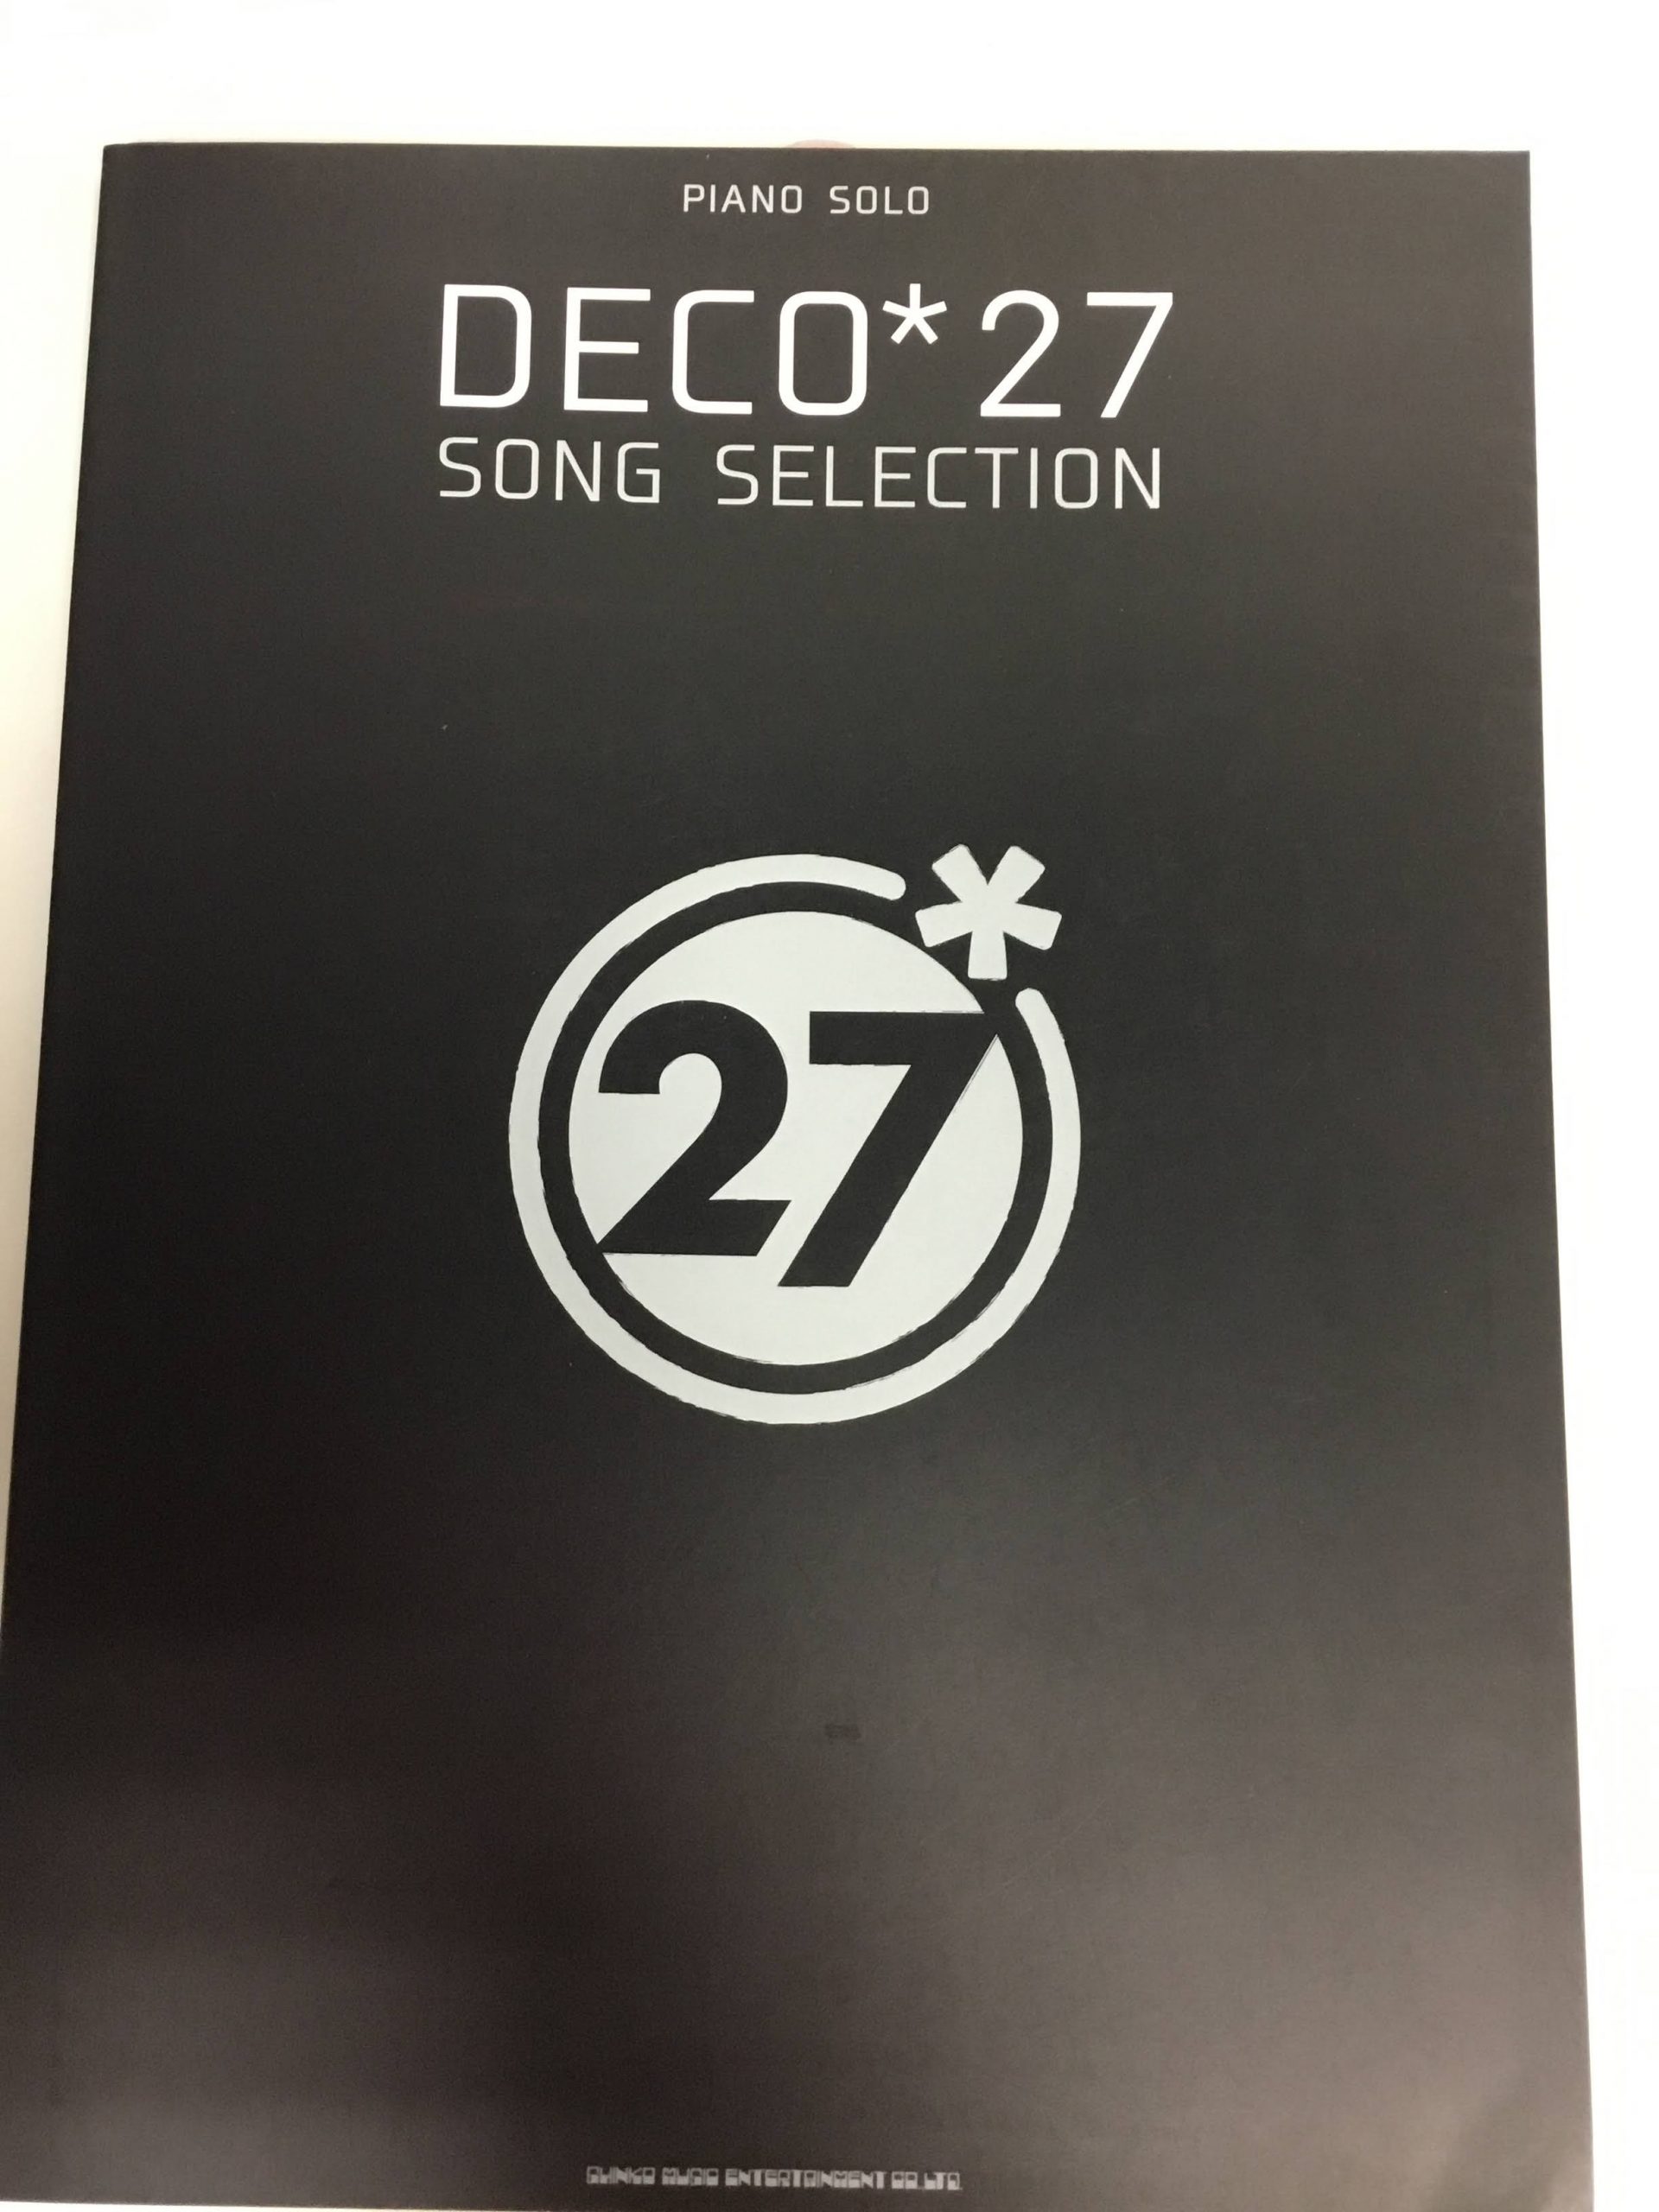 DECO*27 SONG SELECTION ピアノ・ソロ/バンド・スコア｜島村楽器 長崎浜町店